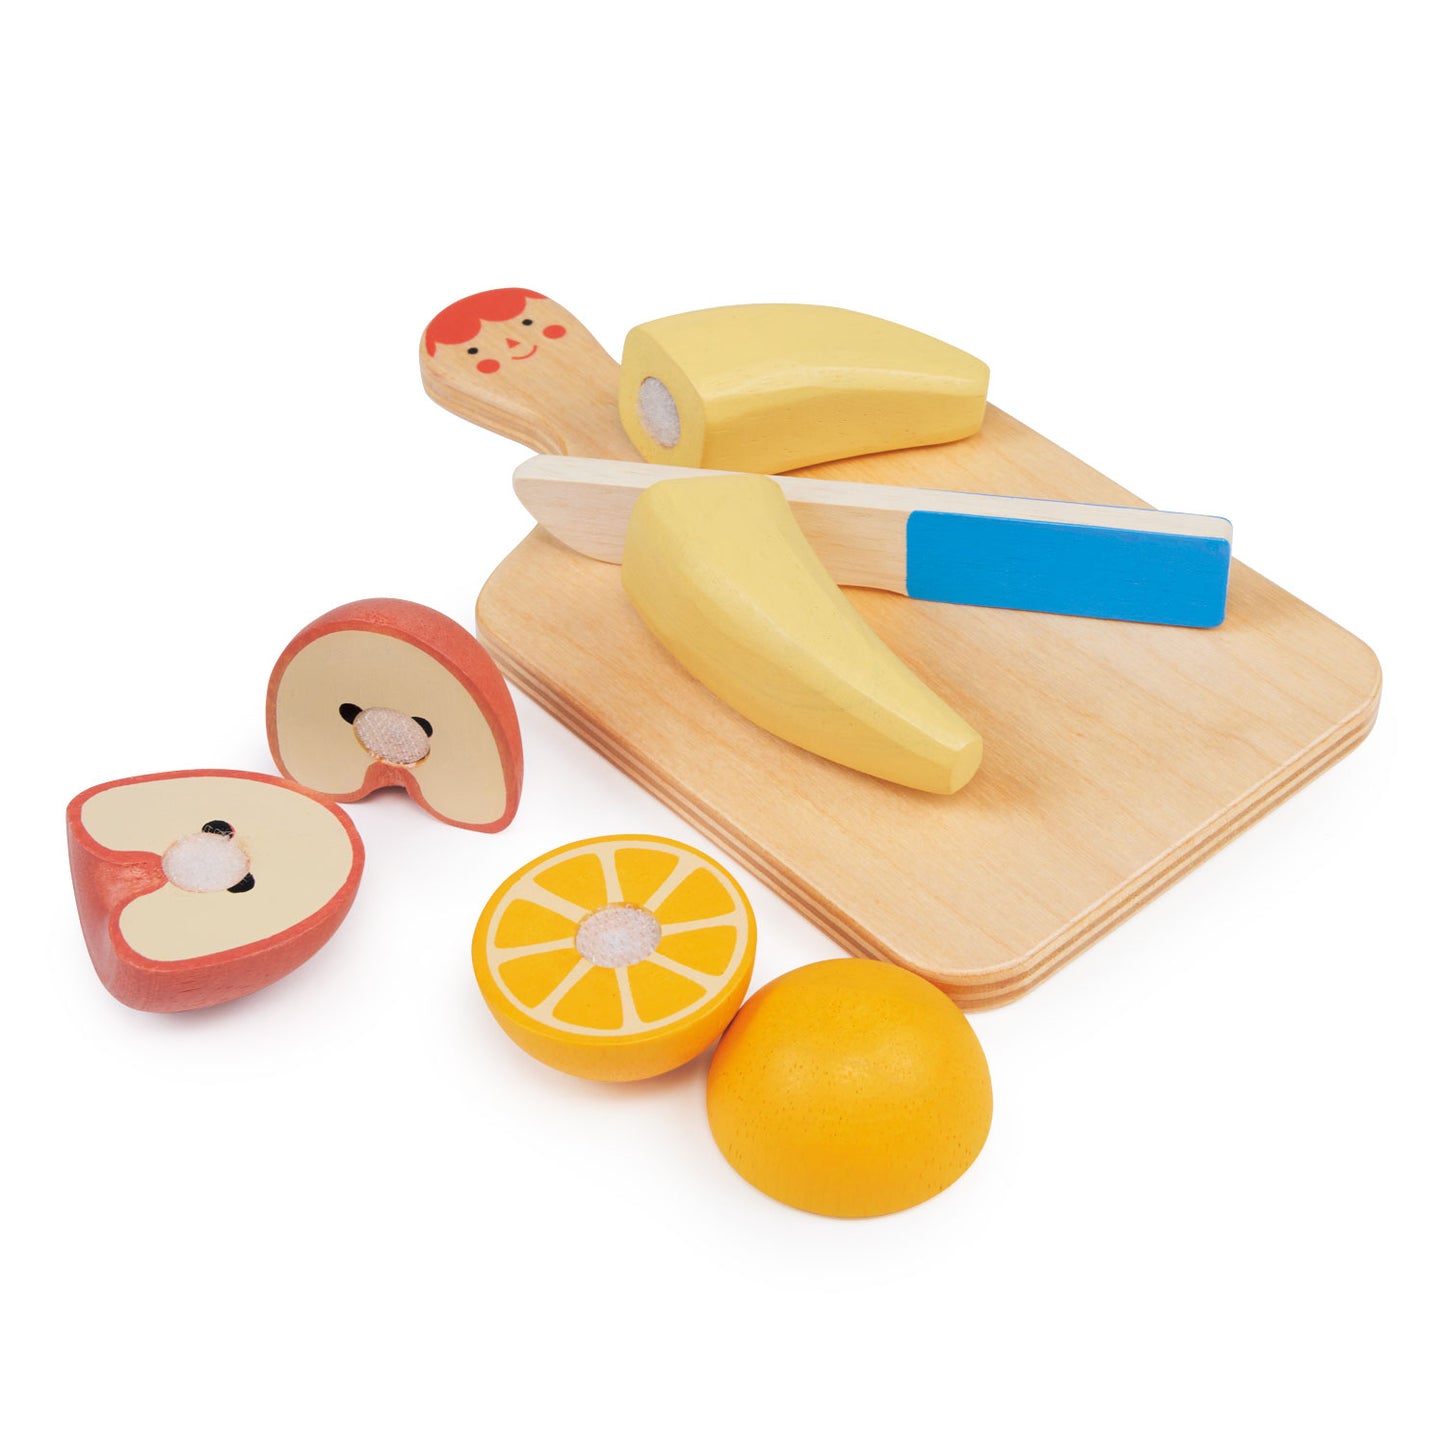 Smiley Fruit Chopping Board by Mentari